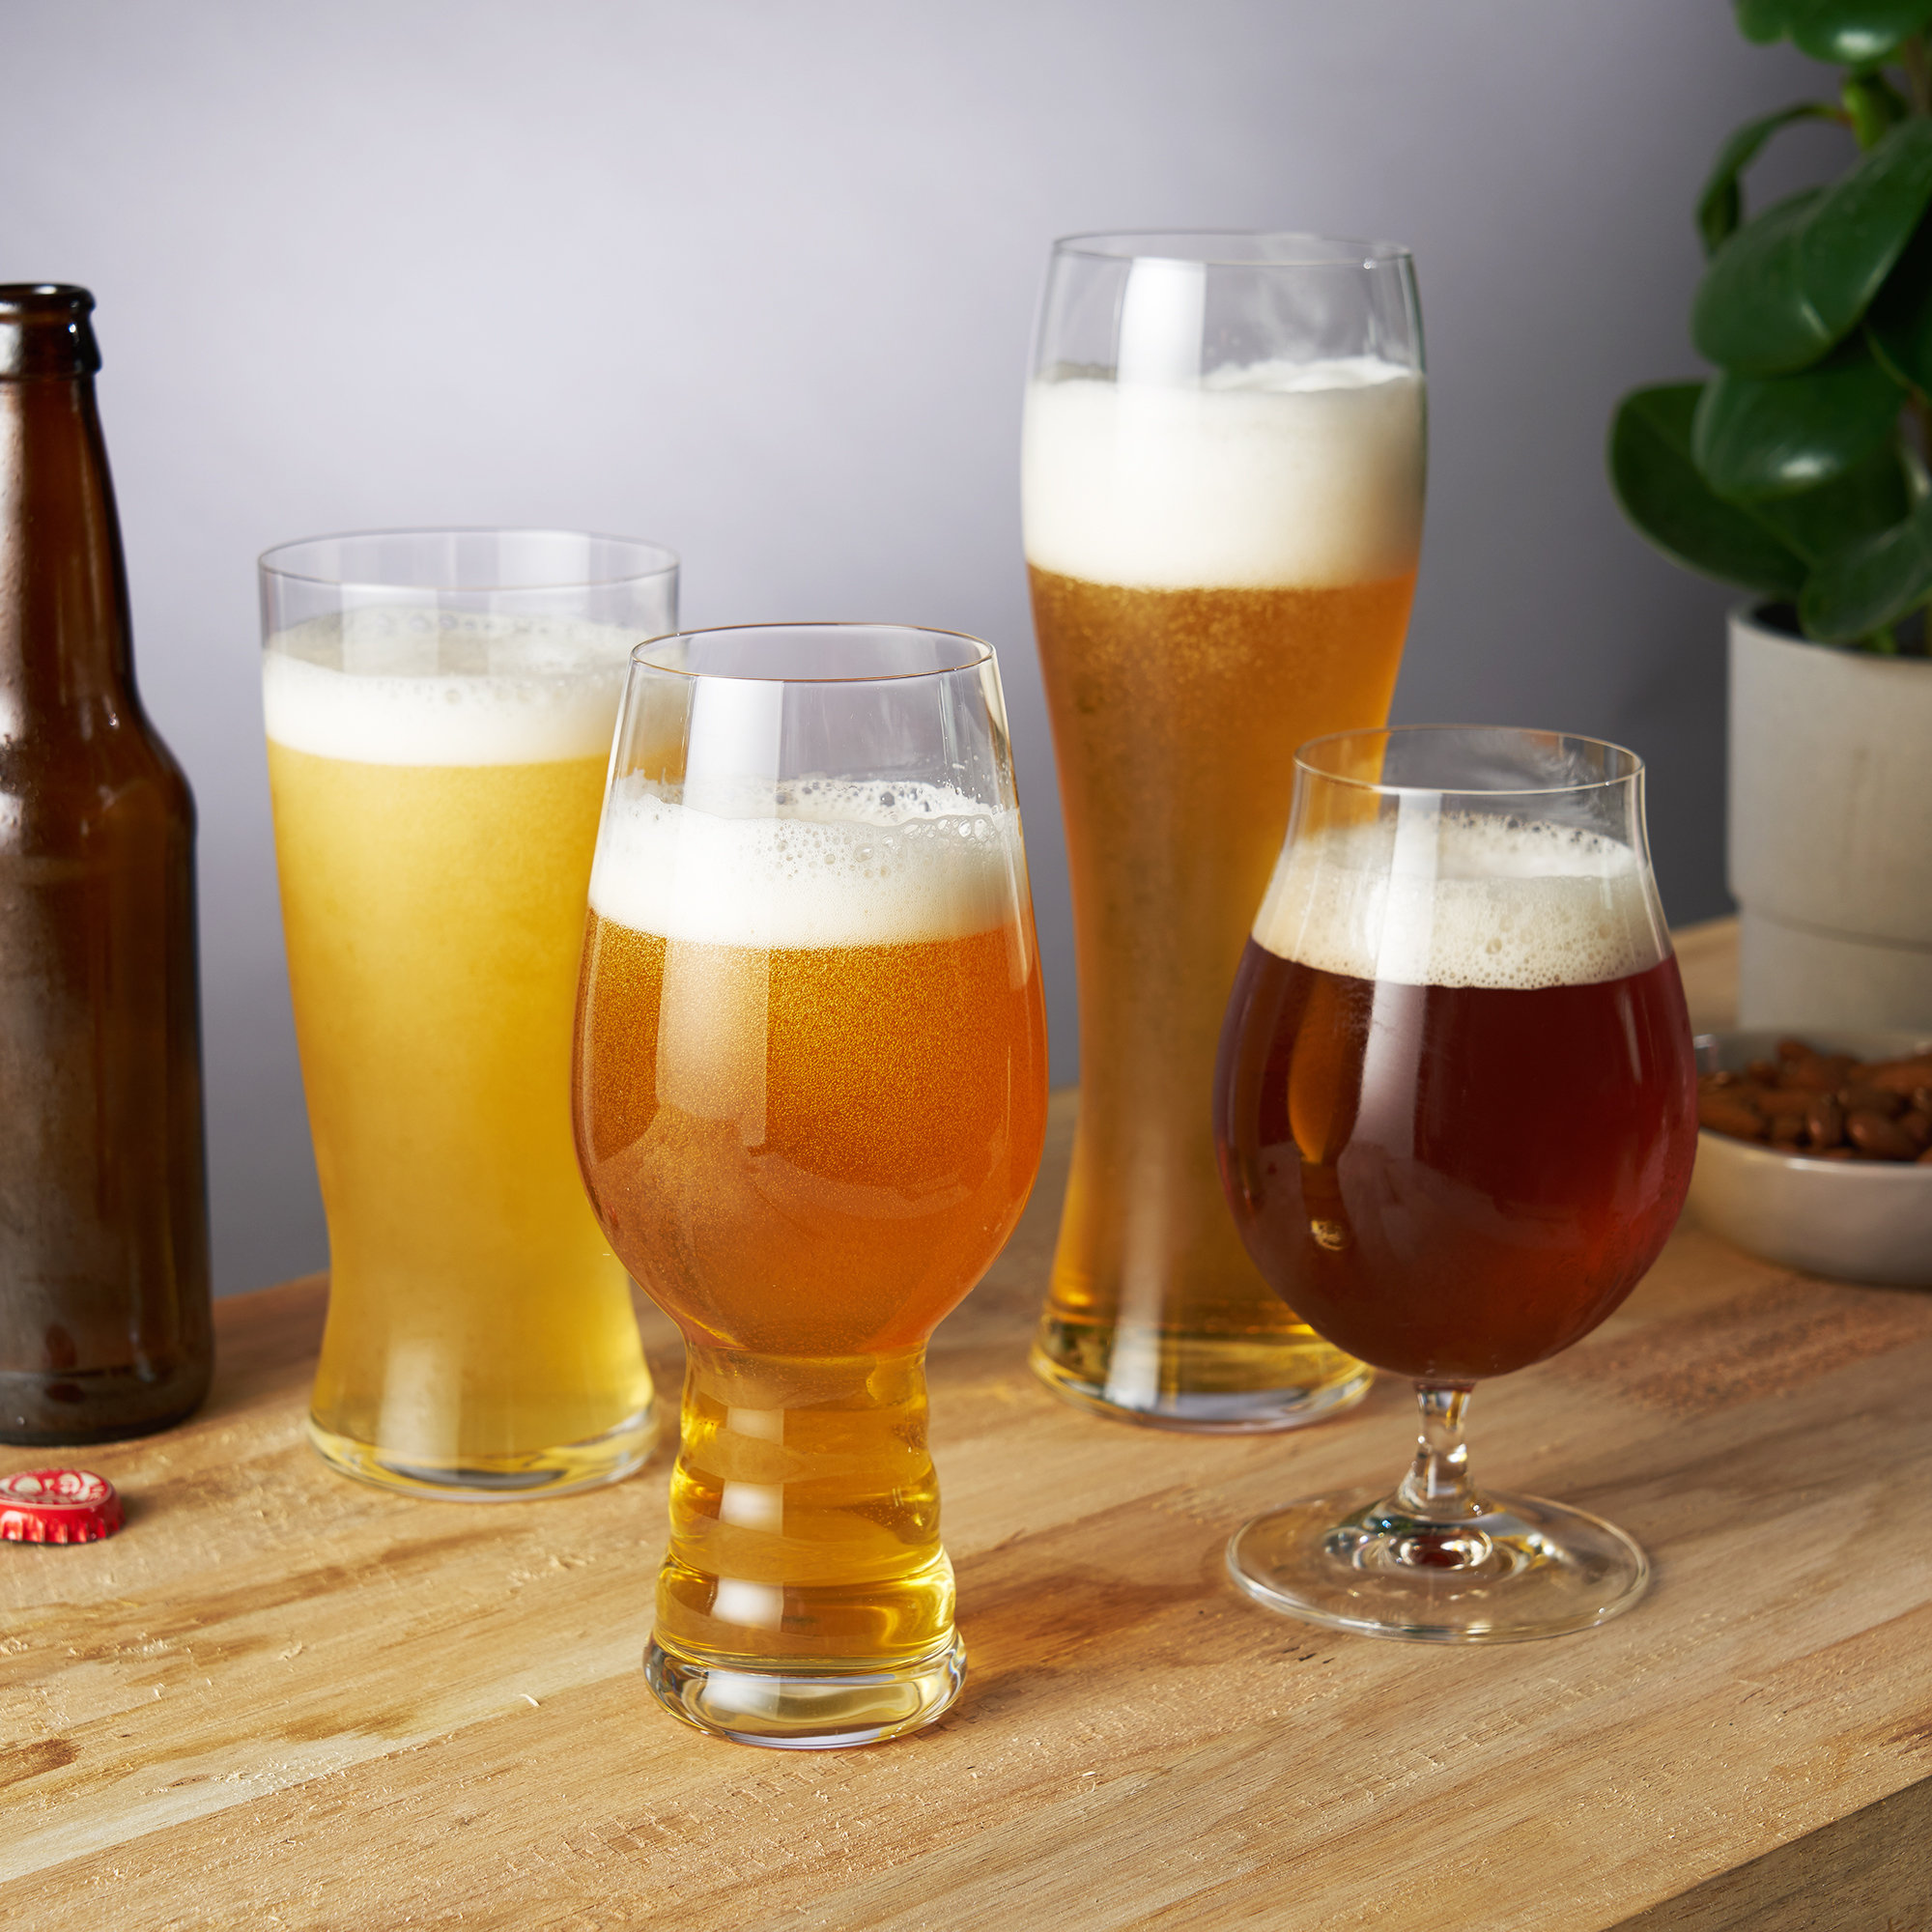 Spiegelau 4 - Piece Lead Free Crystal Beer Flight Set Assorted Glassware Set